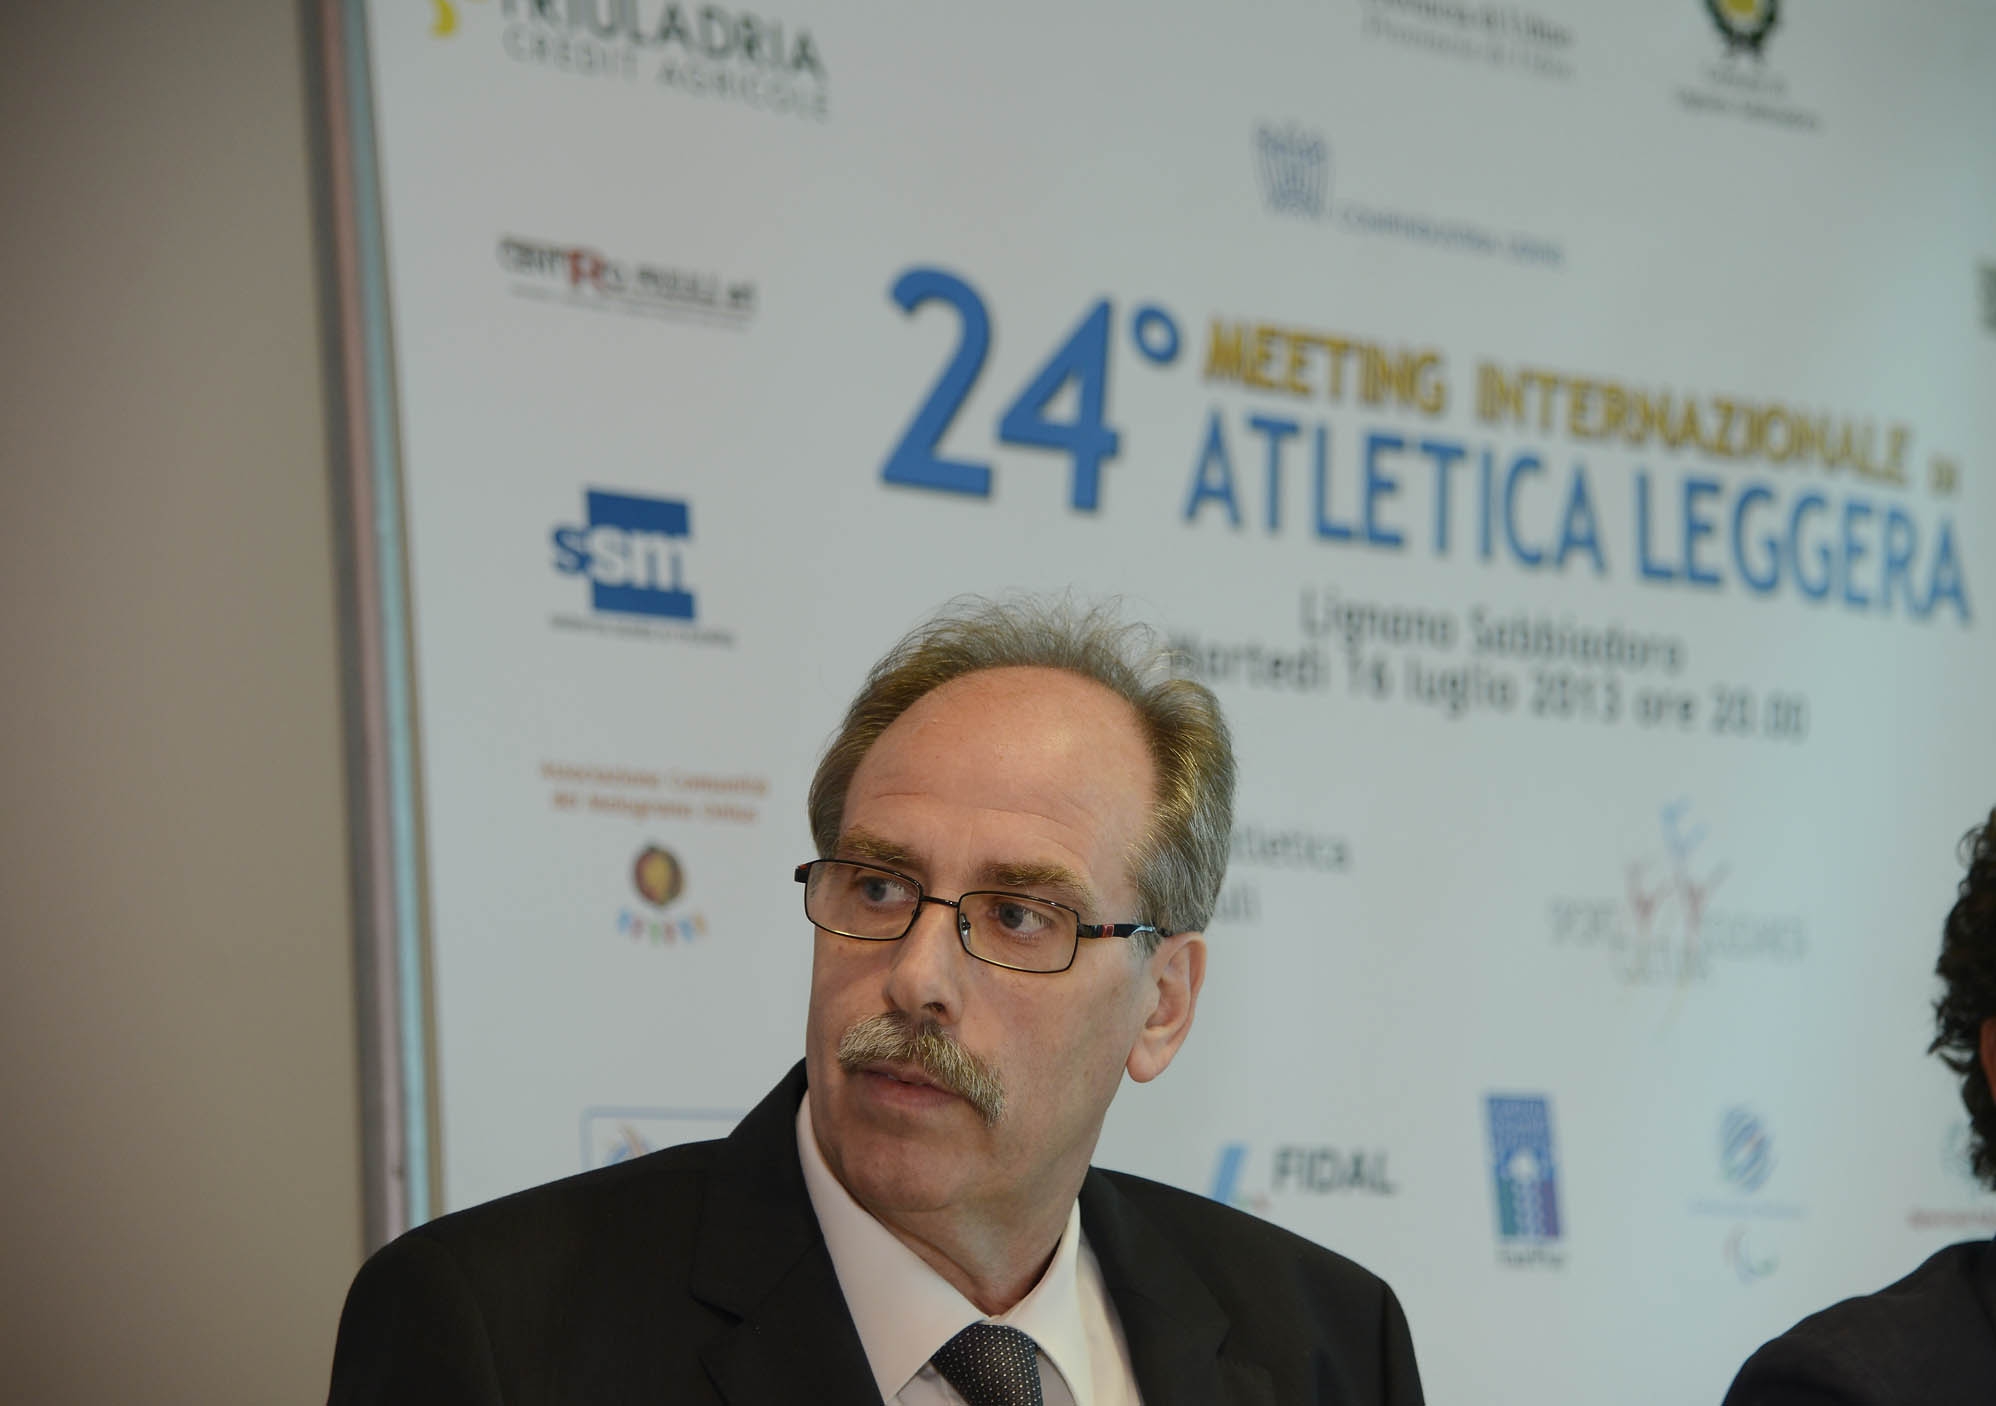 Gianni Torrenti (assessore regionale Cultura, Sport e Relazioni internazionali) alla presentazione del 24° Meeting internazionale di atletica leggera. (Udine, 08/07/13)